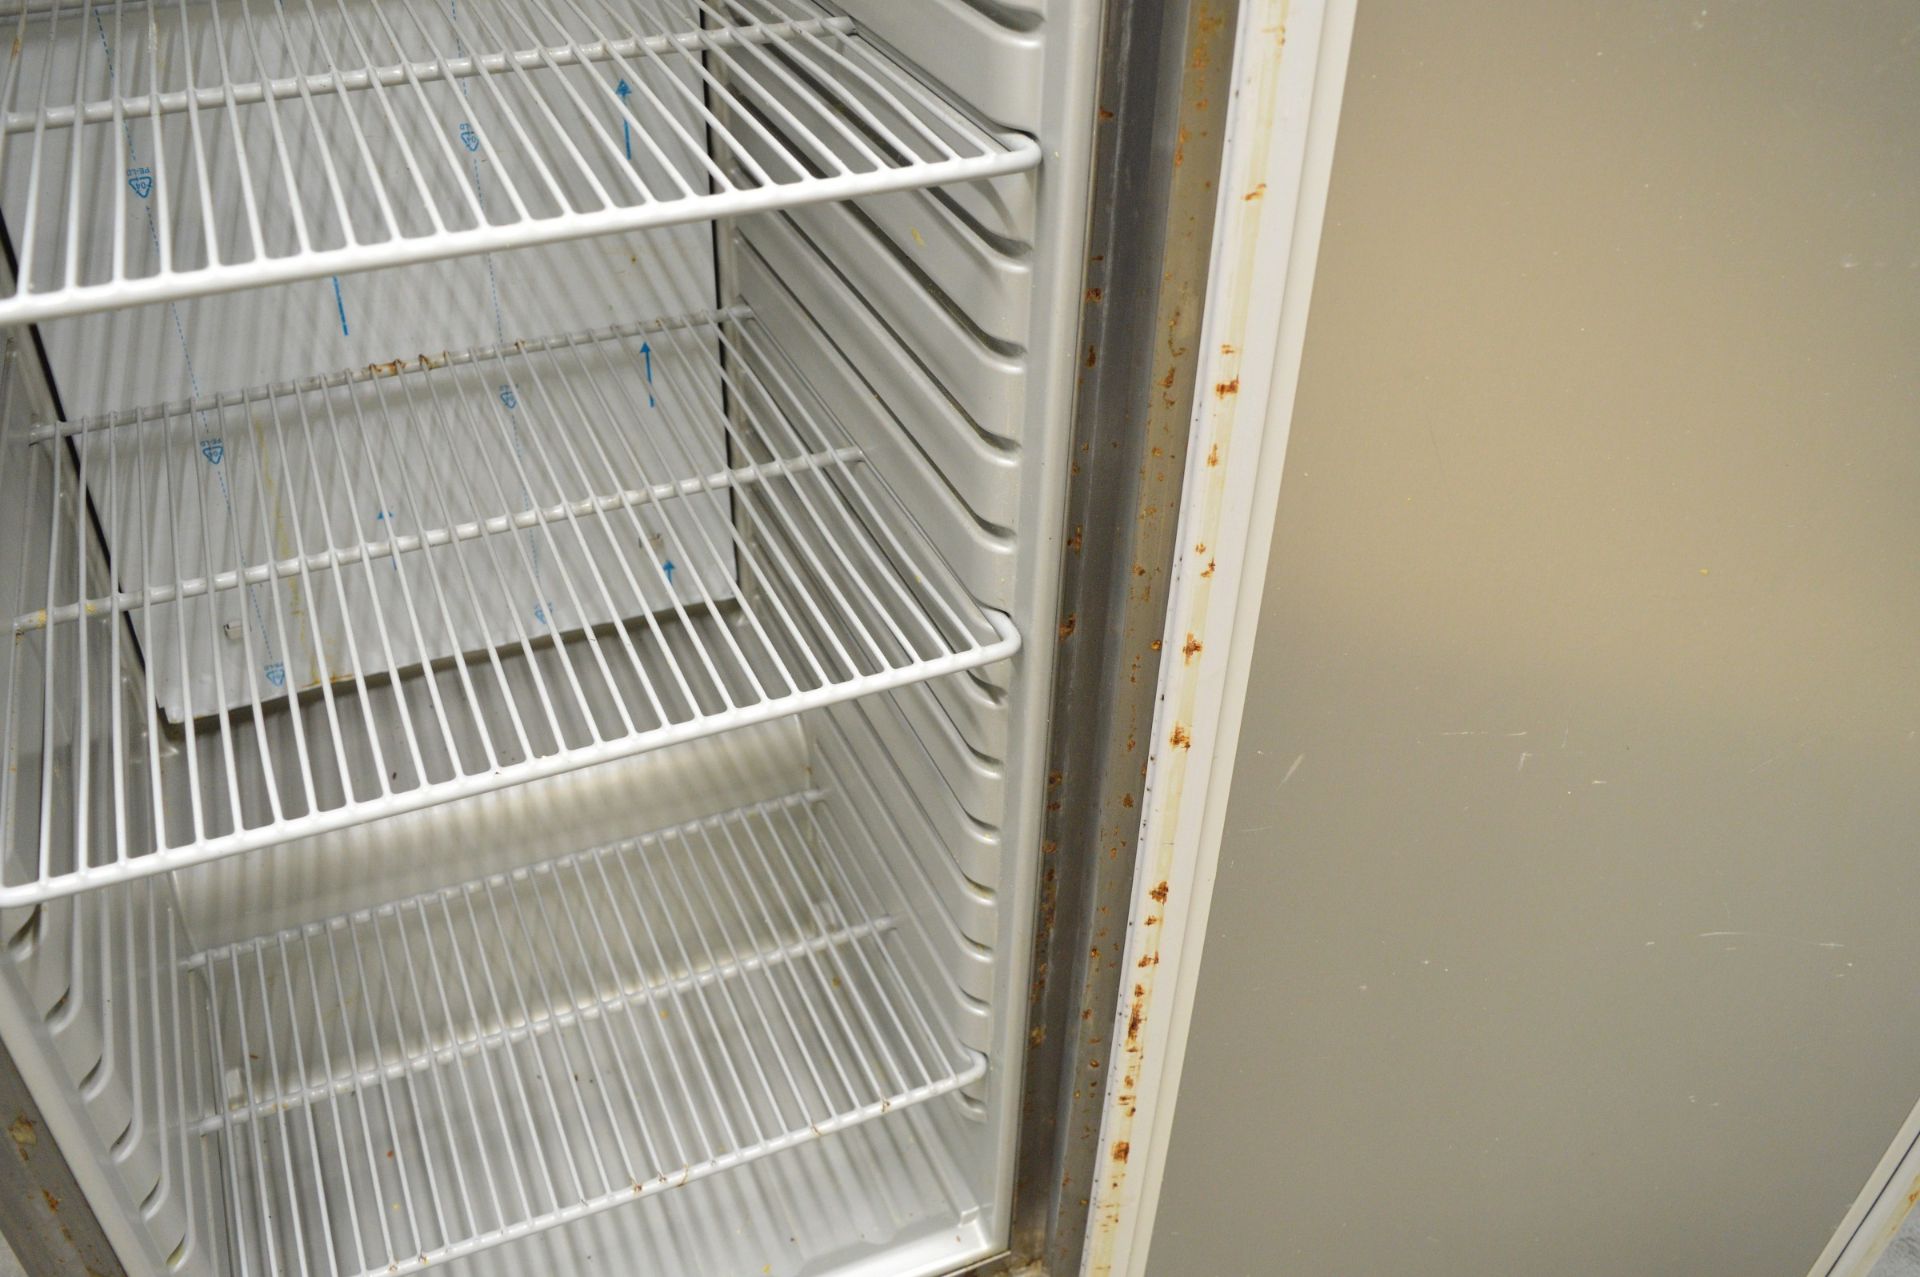 Gram K410 RG C 6N Stainless Steel Upright Refrigerator - Image 5 of 7